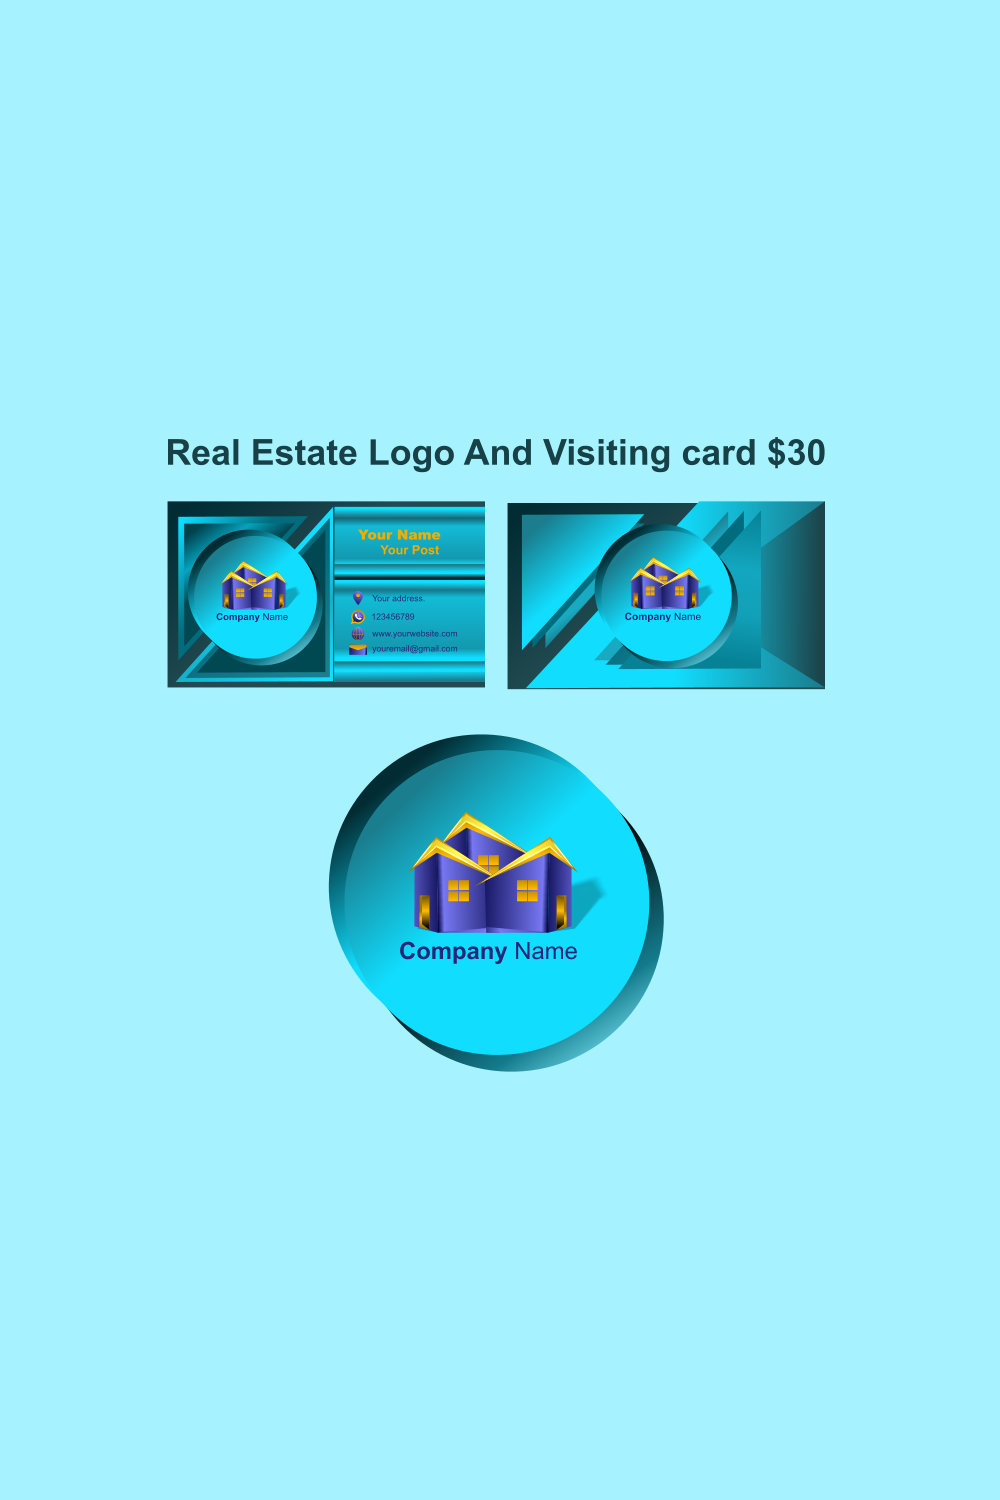 Real Estate Logo and Visiting Card pinterest image.